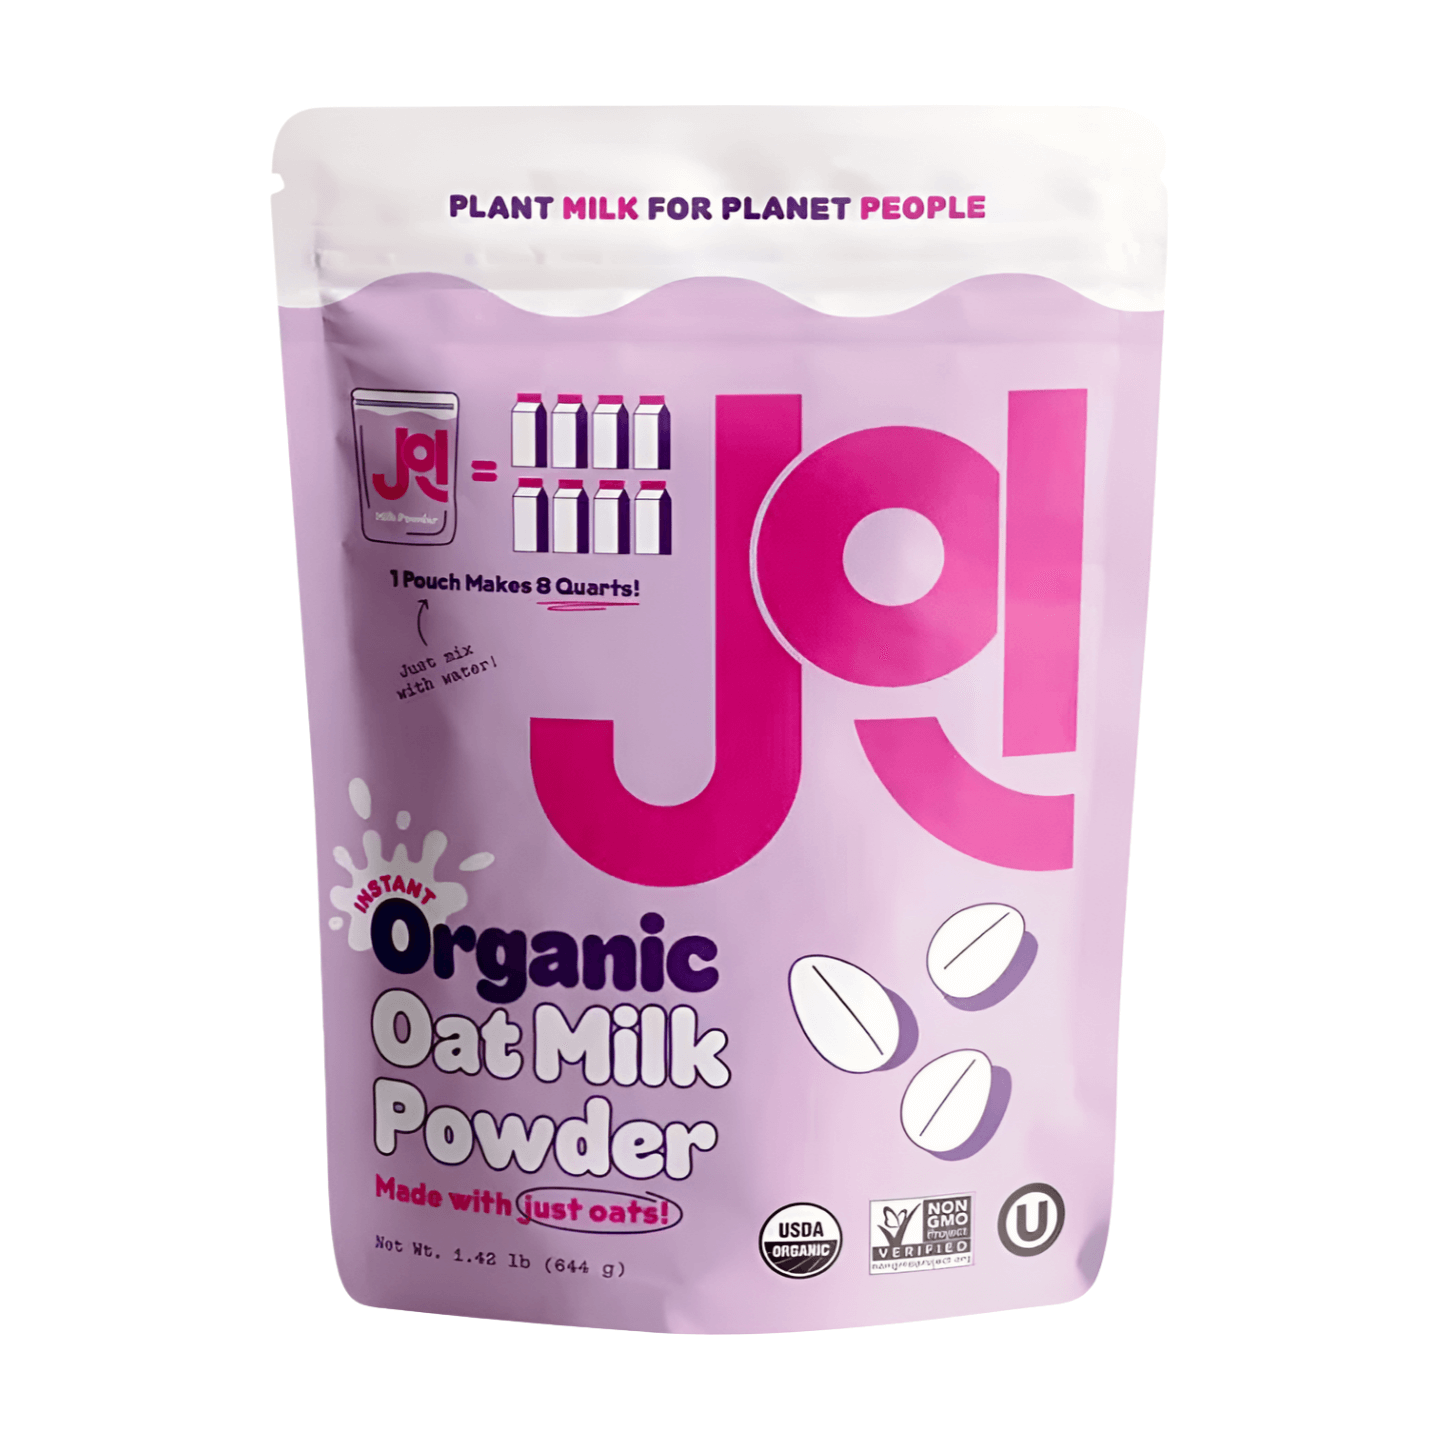 JOI Instant Organic Oat Milk